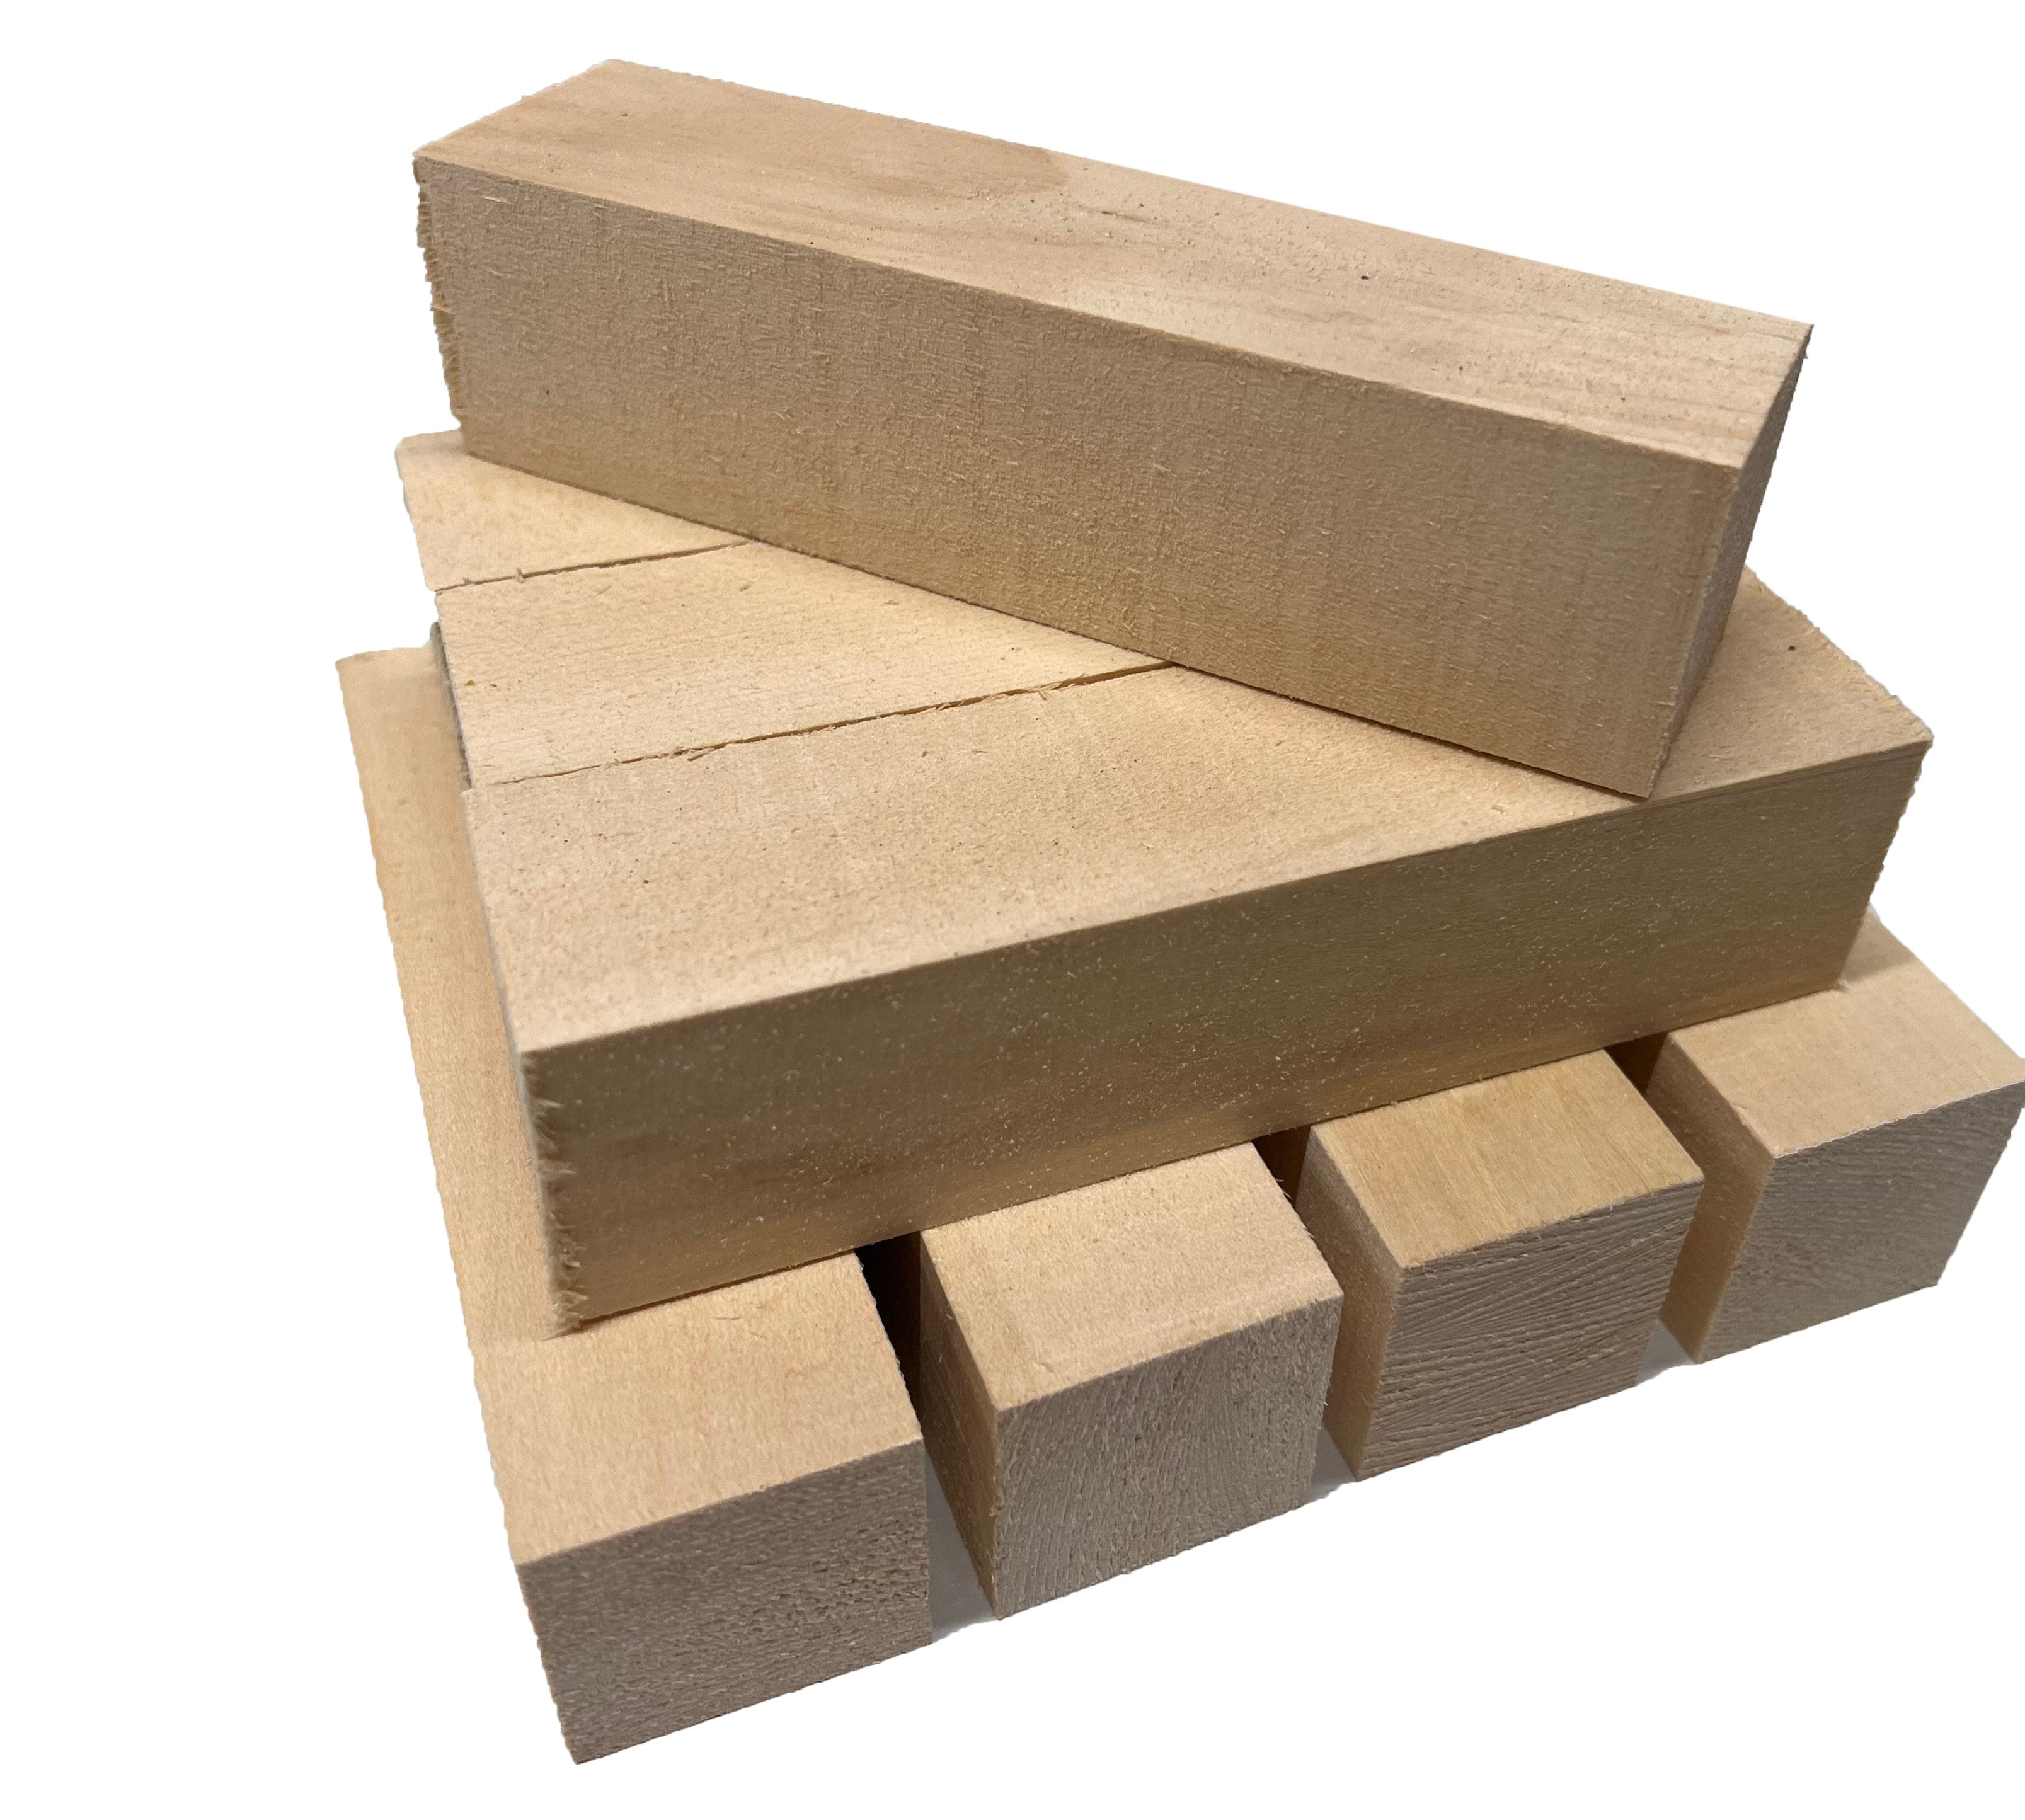 Basswood Carving Blocks - 1 x 1 x 6 (8 Pcs)